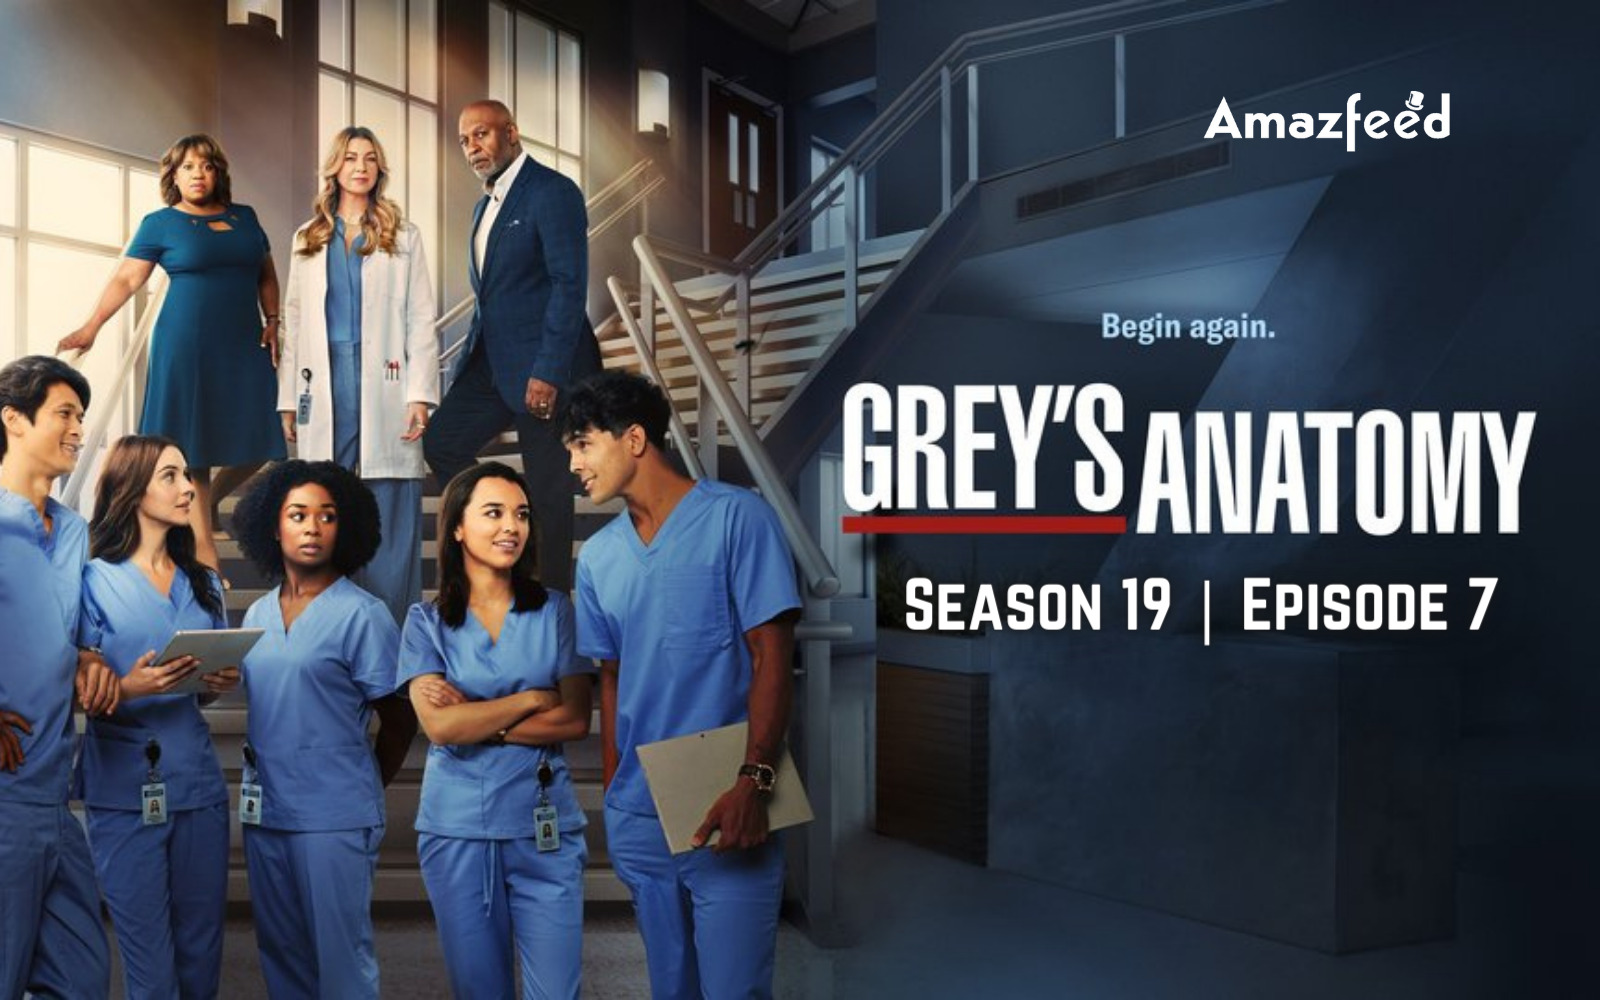 Grey’s Anatomy Season 19 Episode 7.1